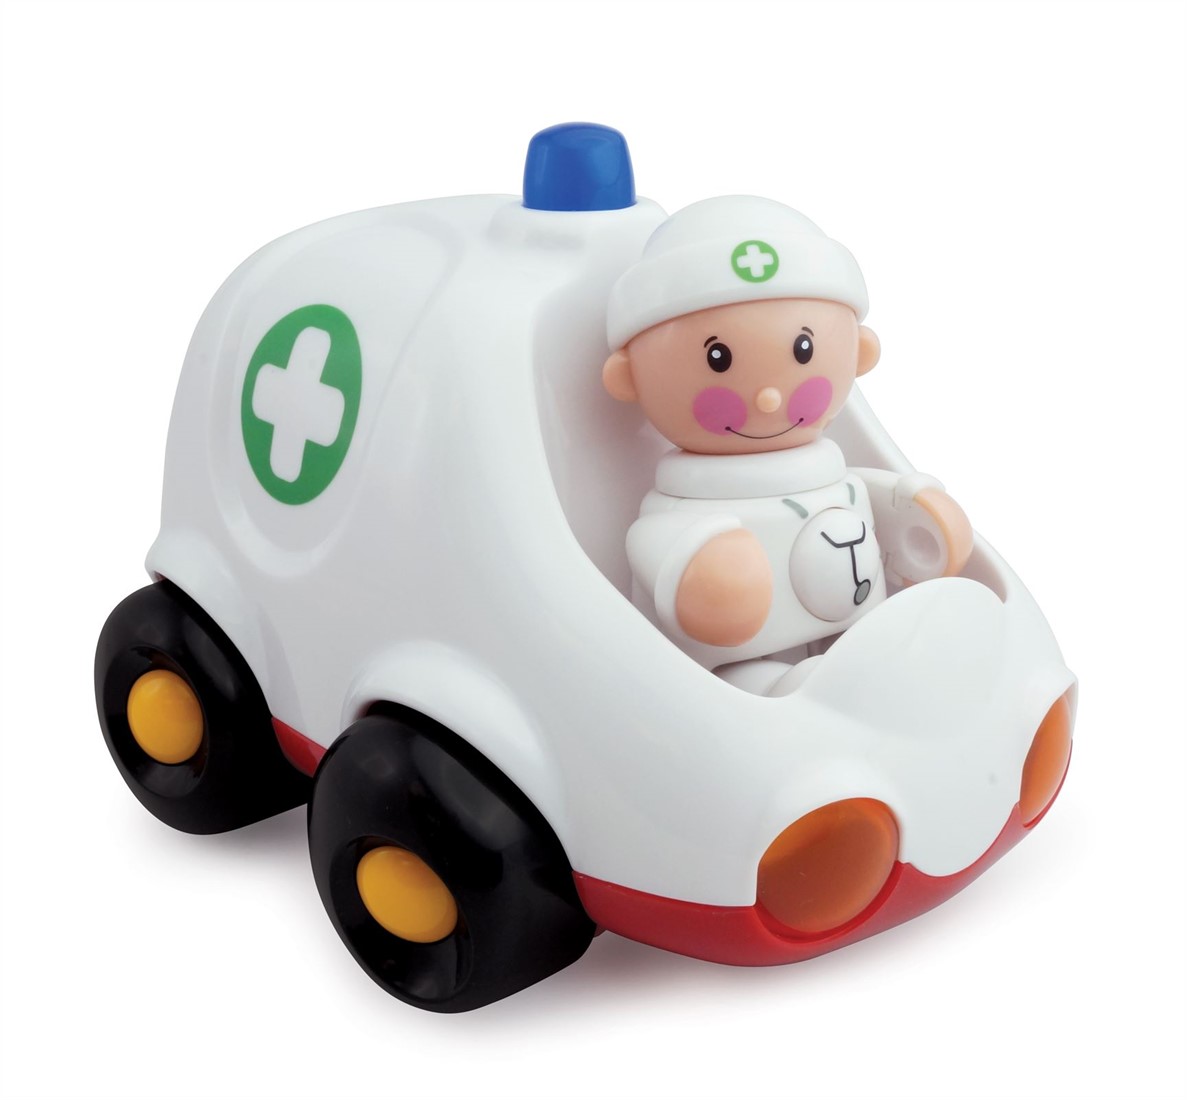 Tolo First Friends Véhicule jouet - Ambulance